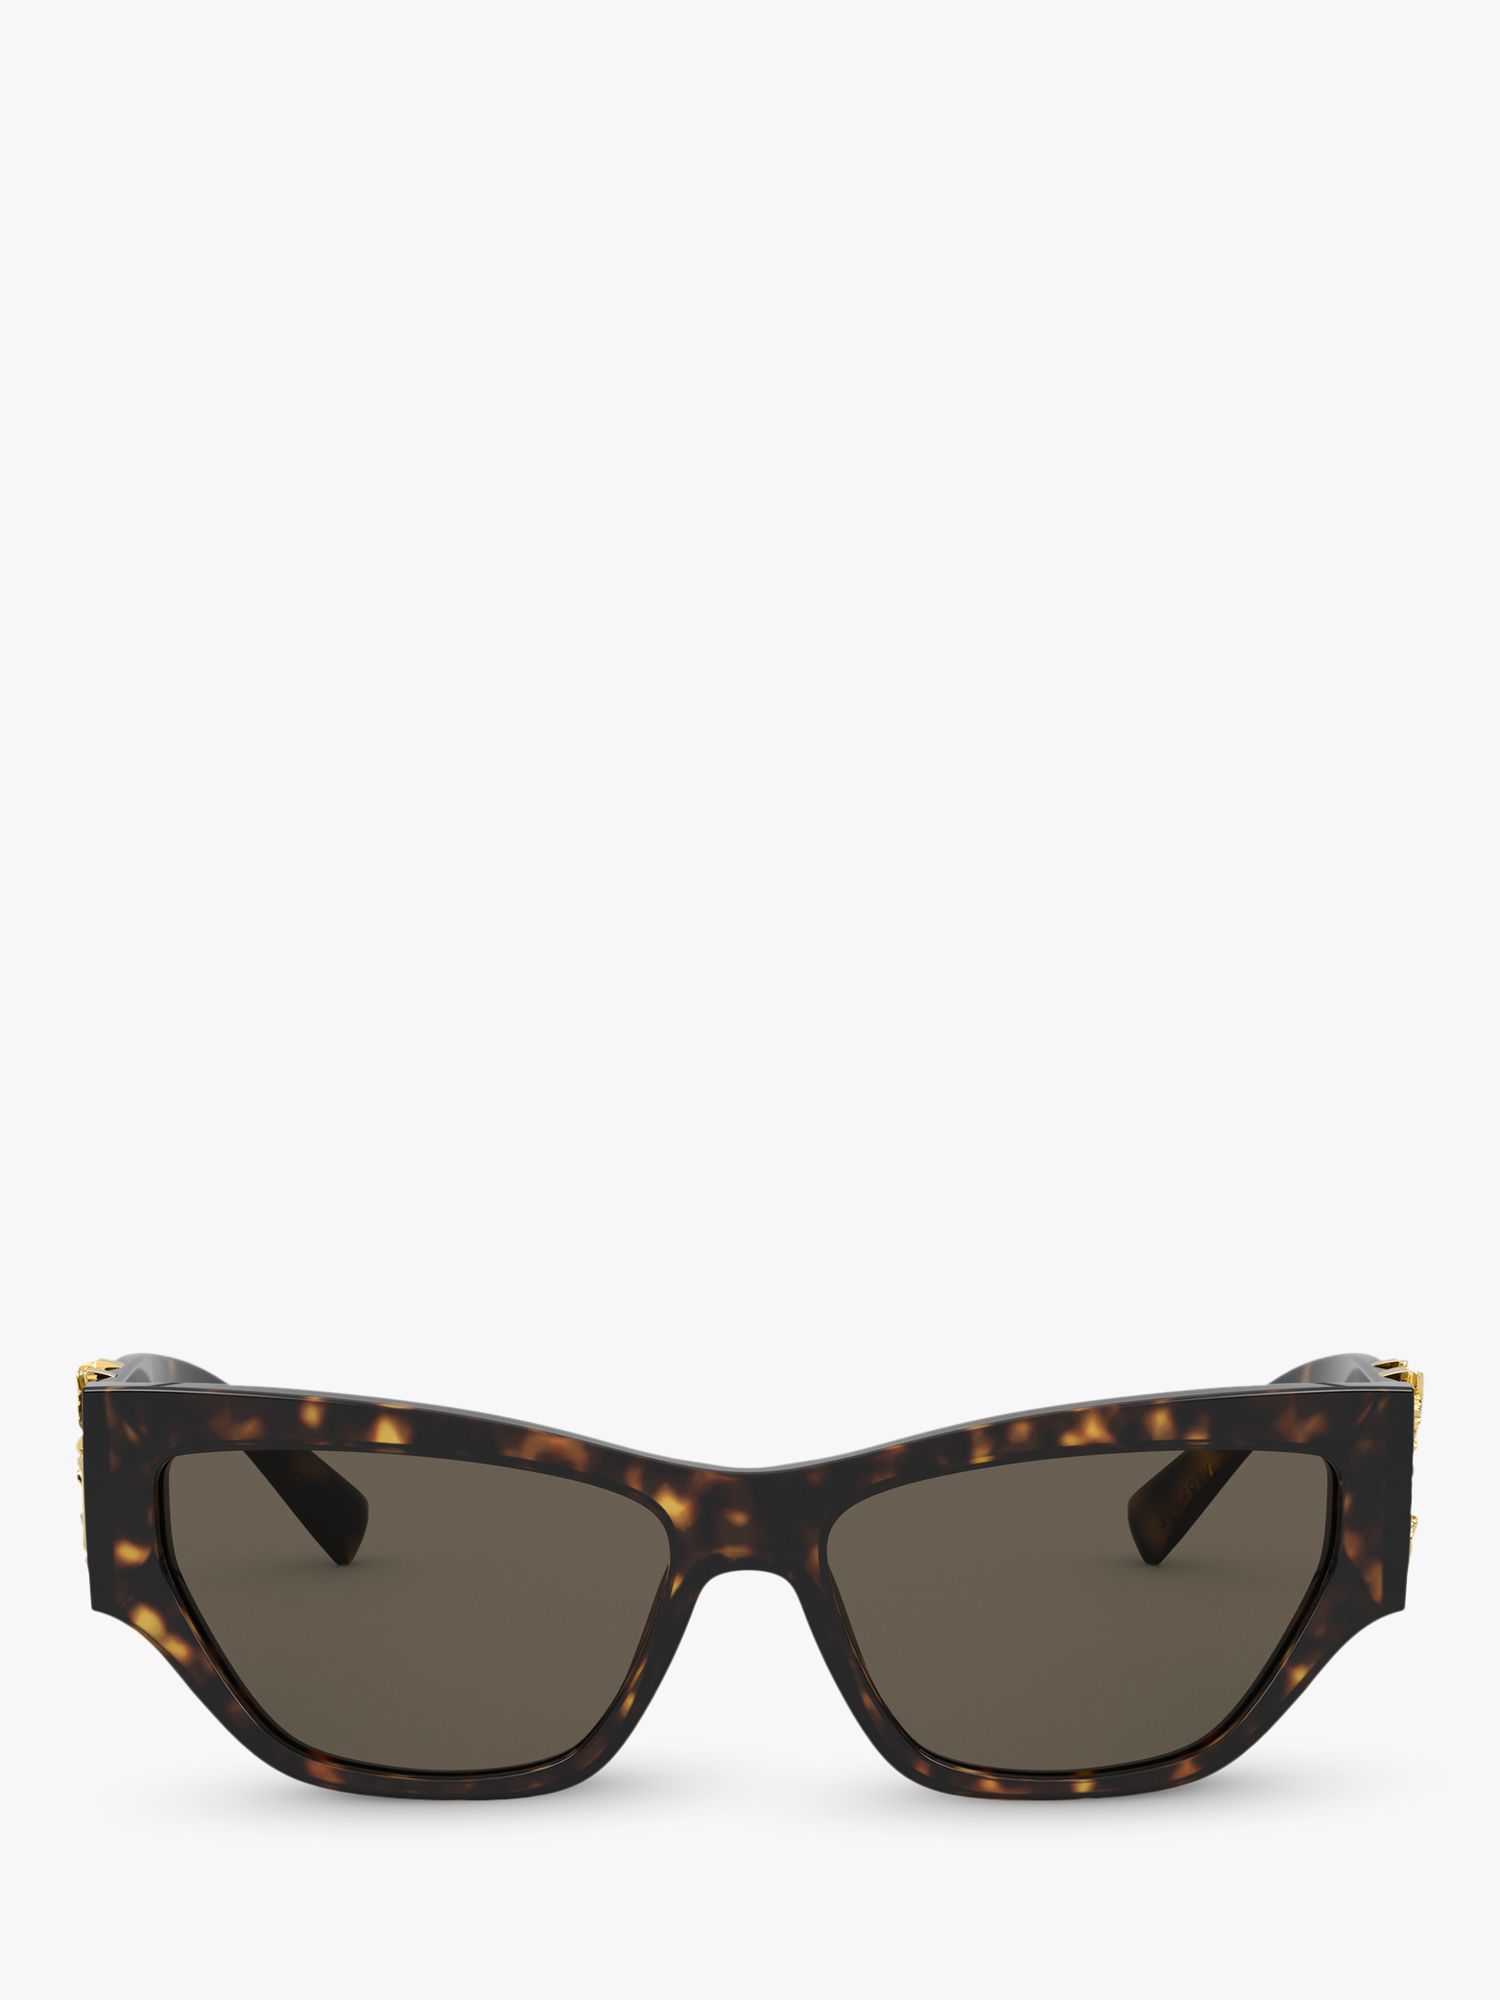 Versace VE4383 Women's Cat Eye Sunglasses, Havana/Gold at John Lewis ...